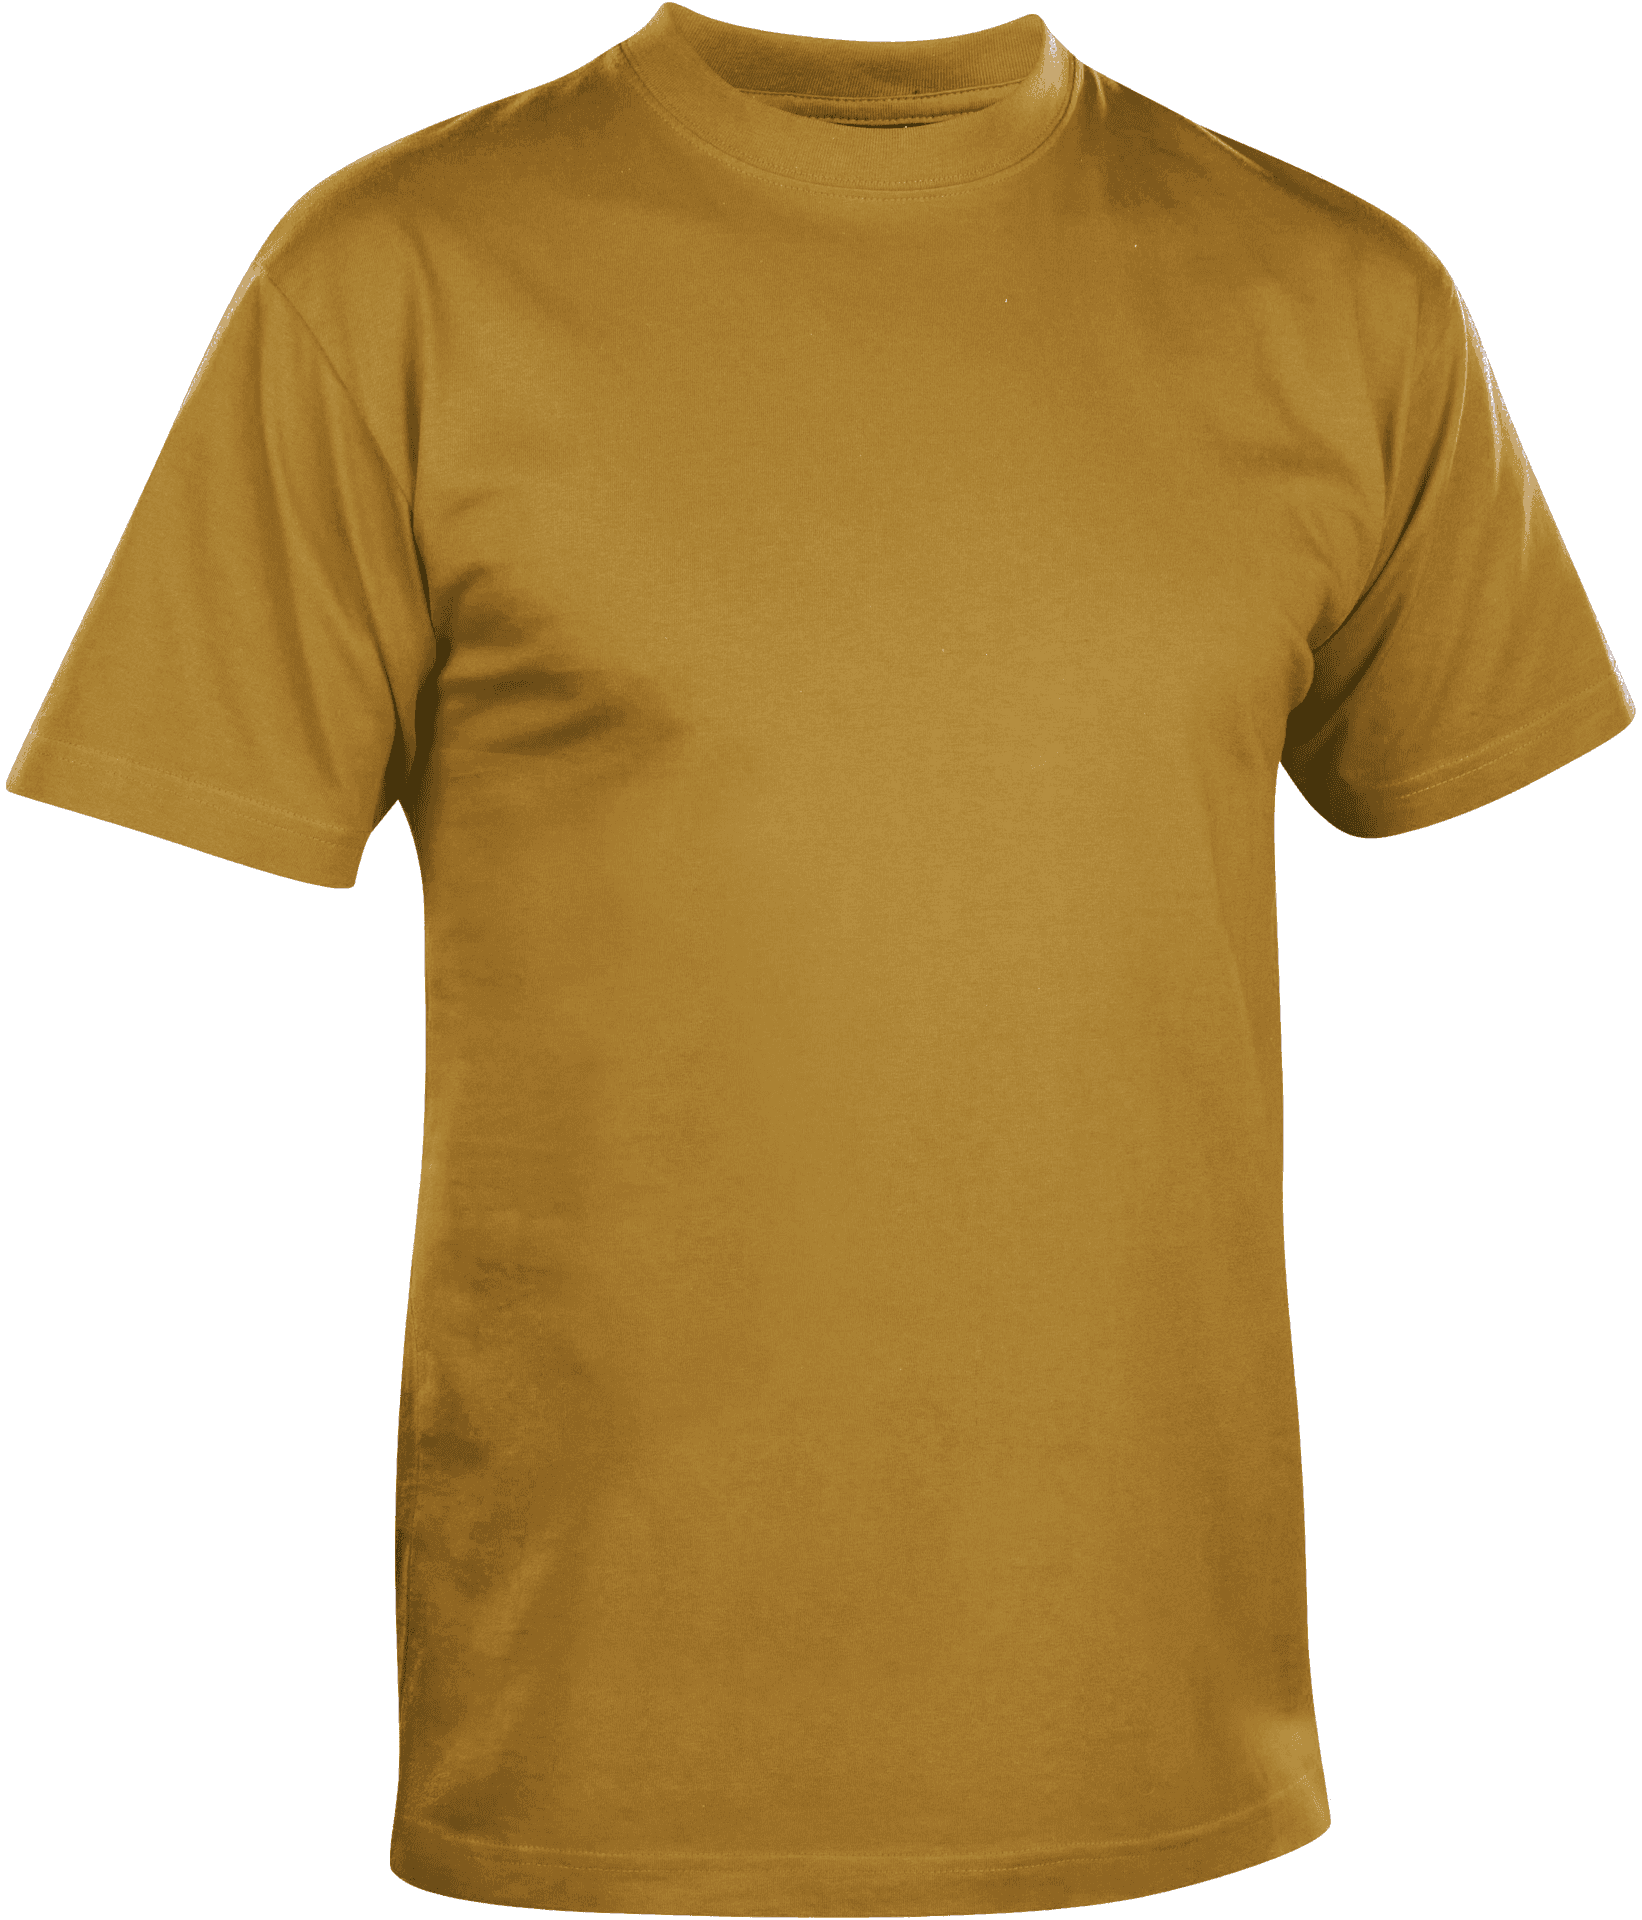 Plain Gold T Shirt Image PNG